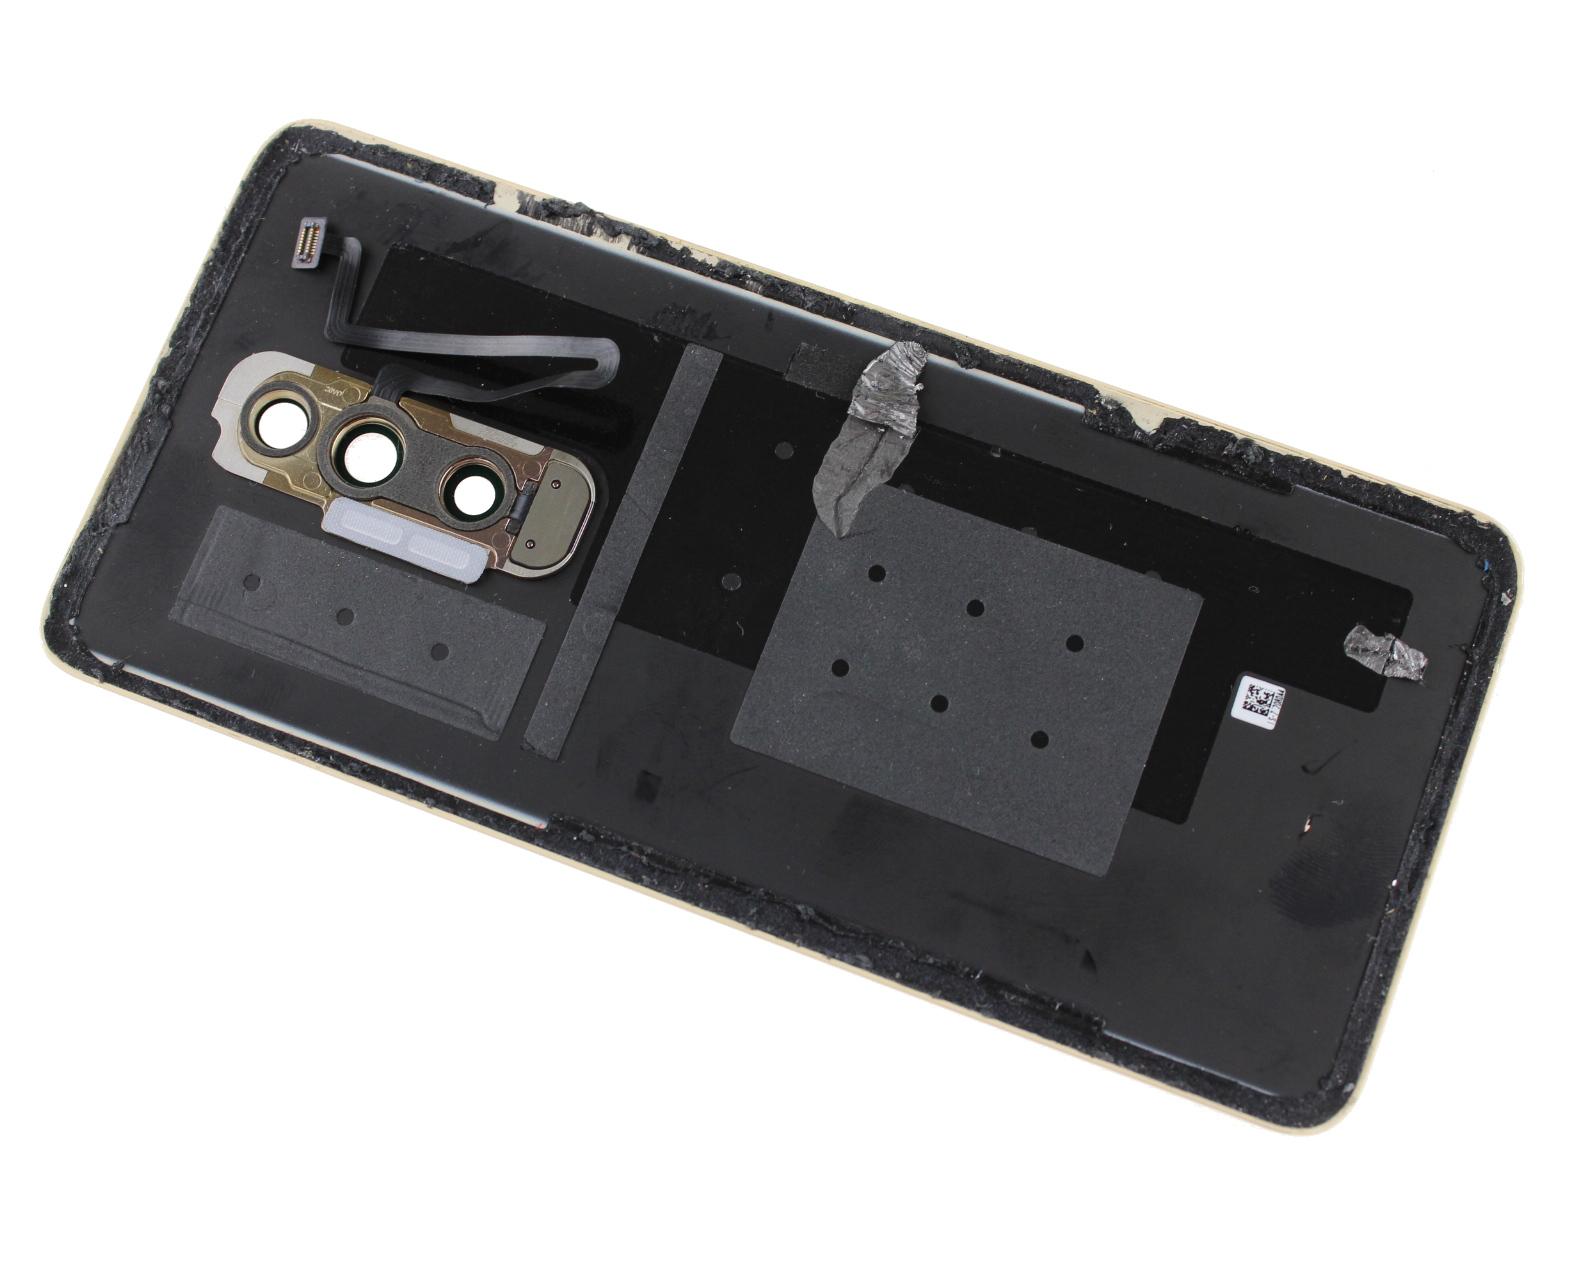 Originál kryt baterie OnePlus 7 Pro GM1913 perleťový - demontovaný díl